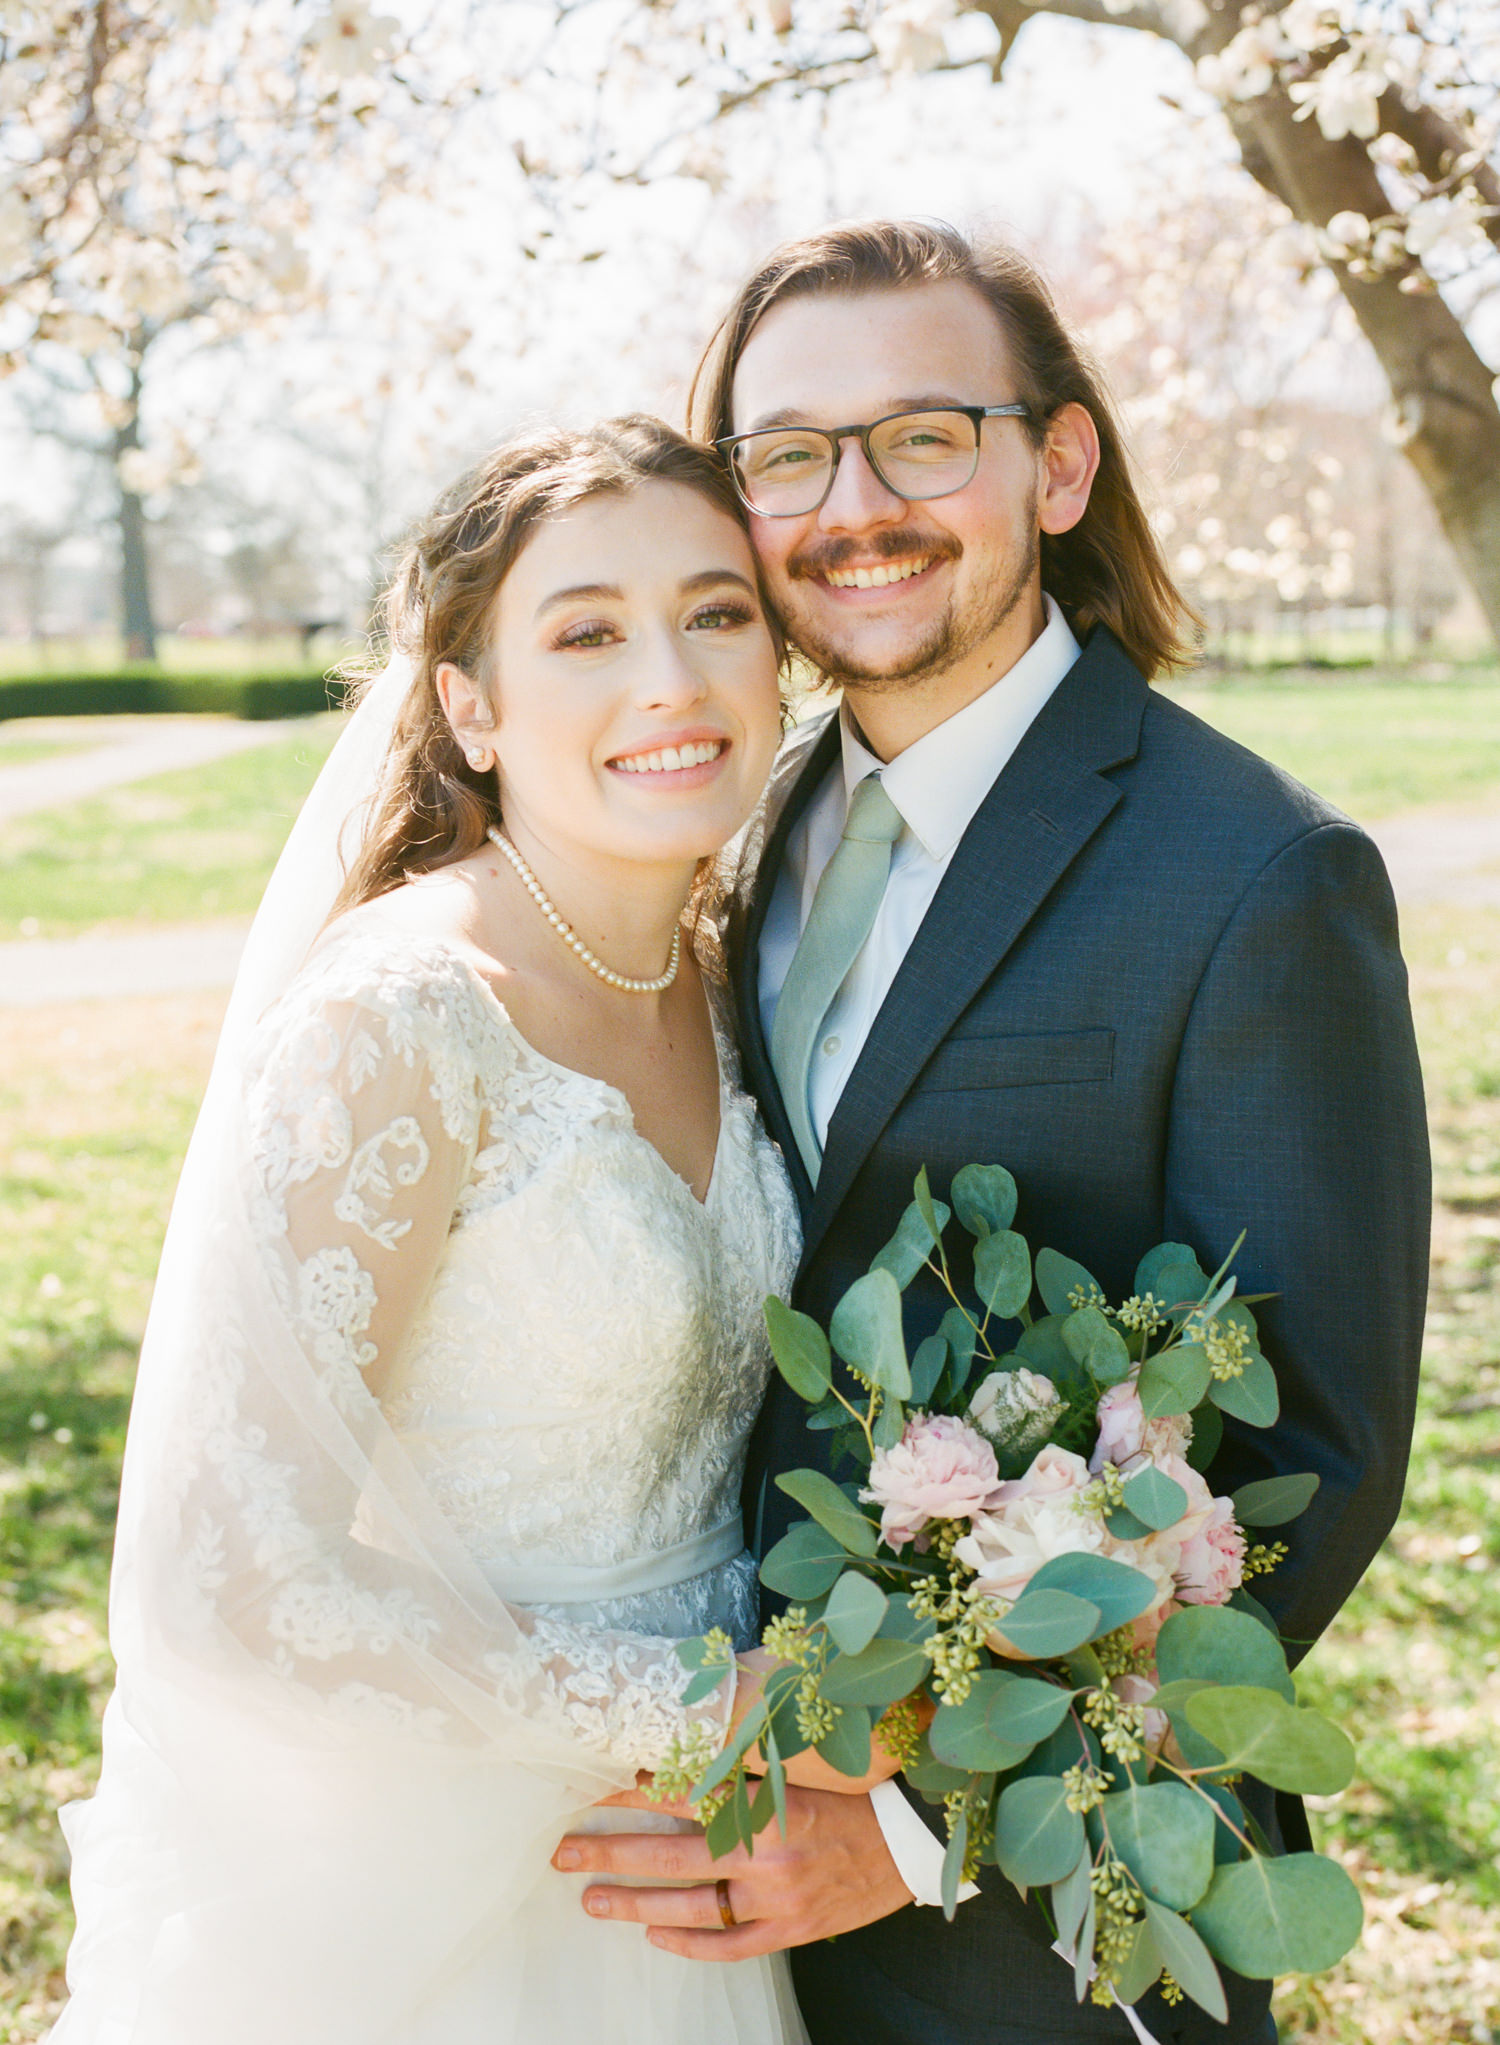 McKenna and Christian's Spring Forest Park Jewel Box Wedding | Erica ...